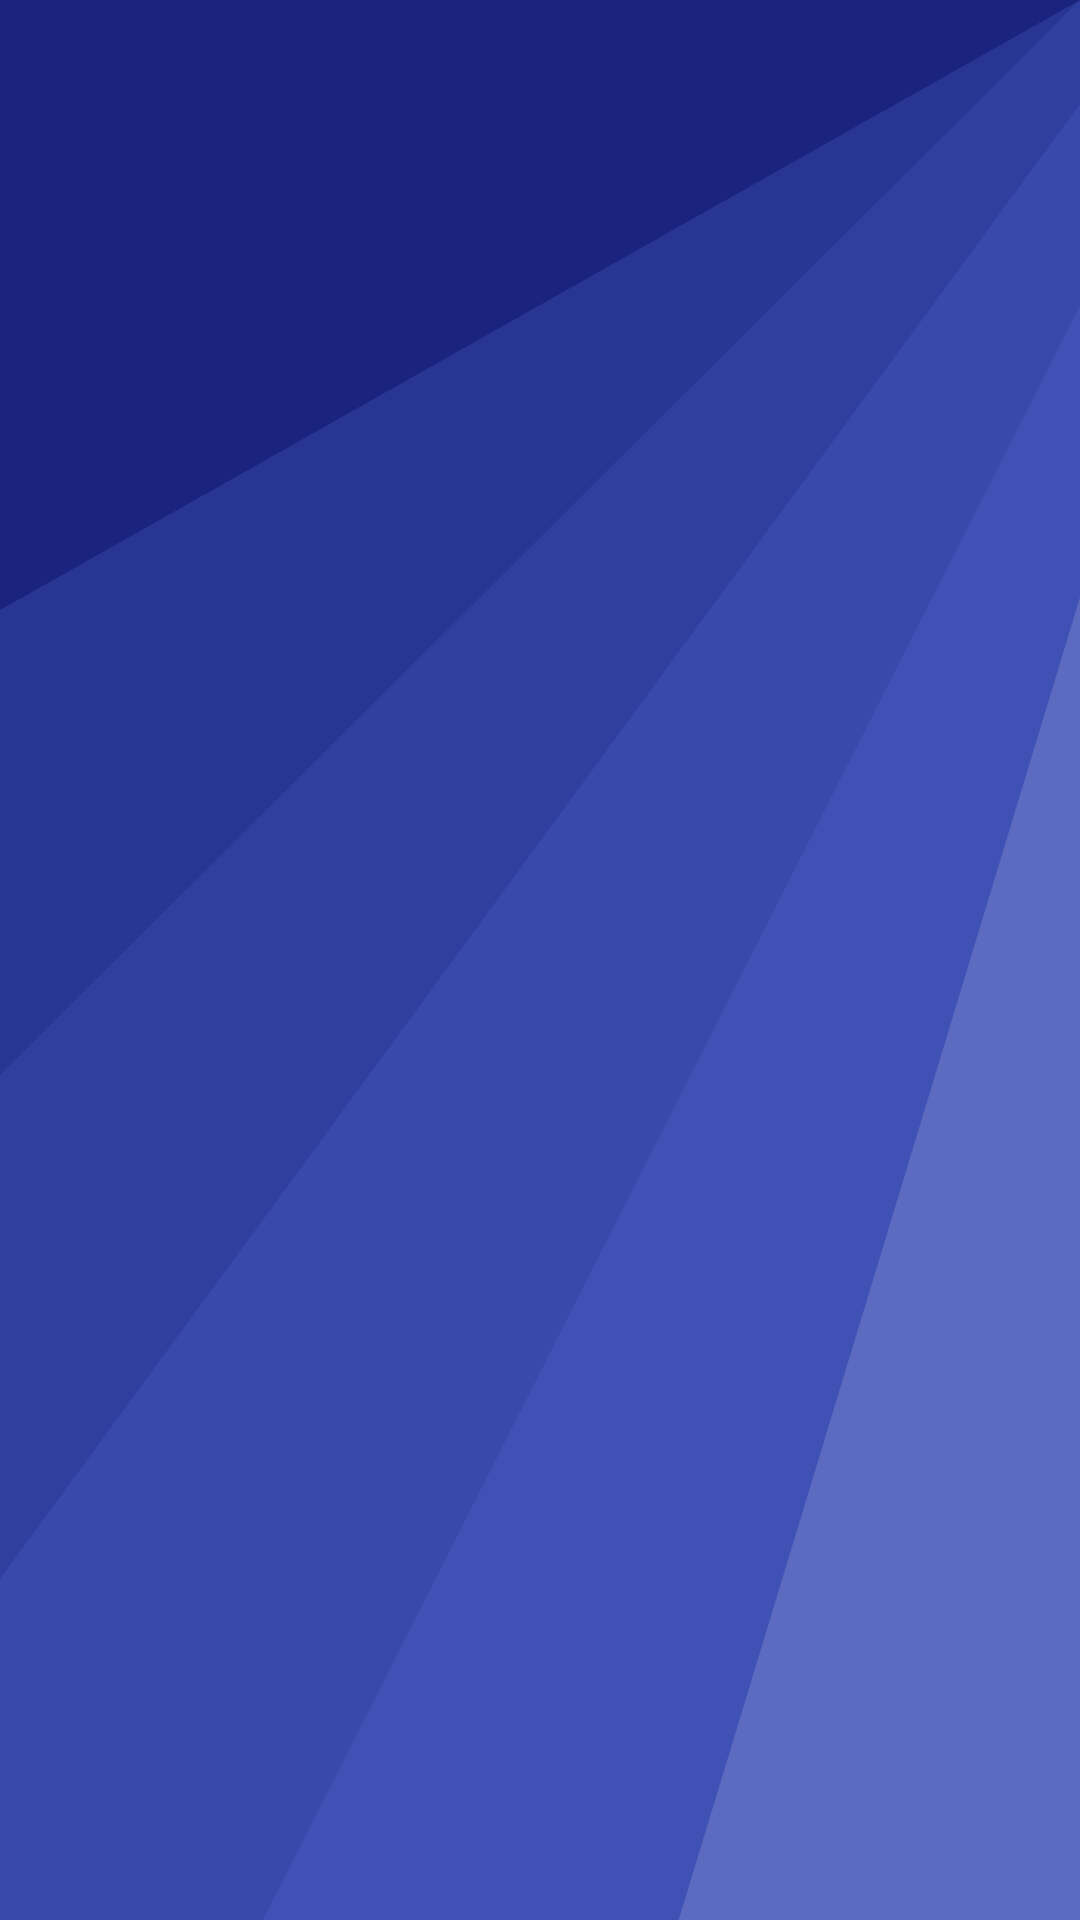 fondos tapete,kobaltblau,blau,tagsüber,elektrisches blau,violett